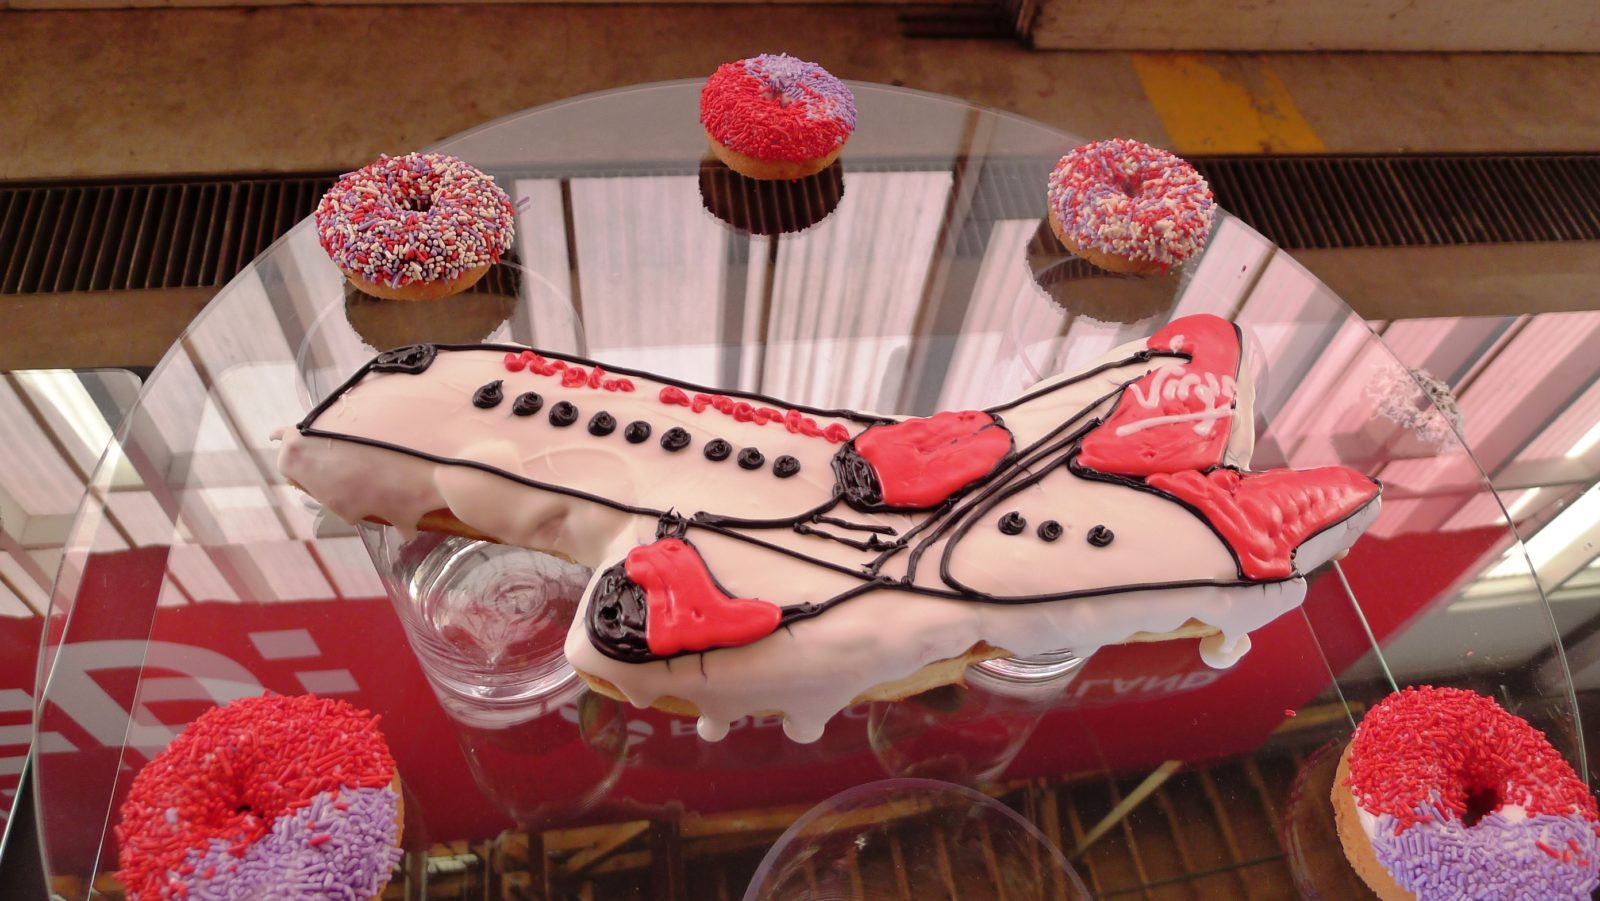 Virgin America donut plane